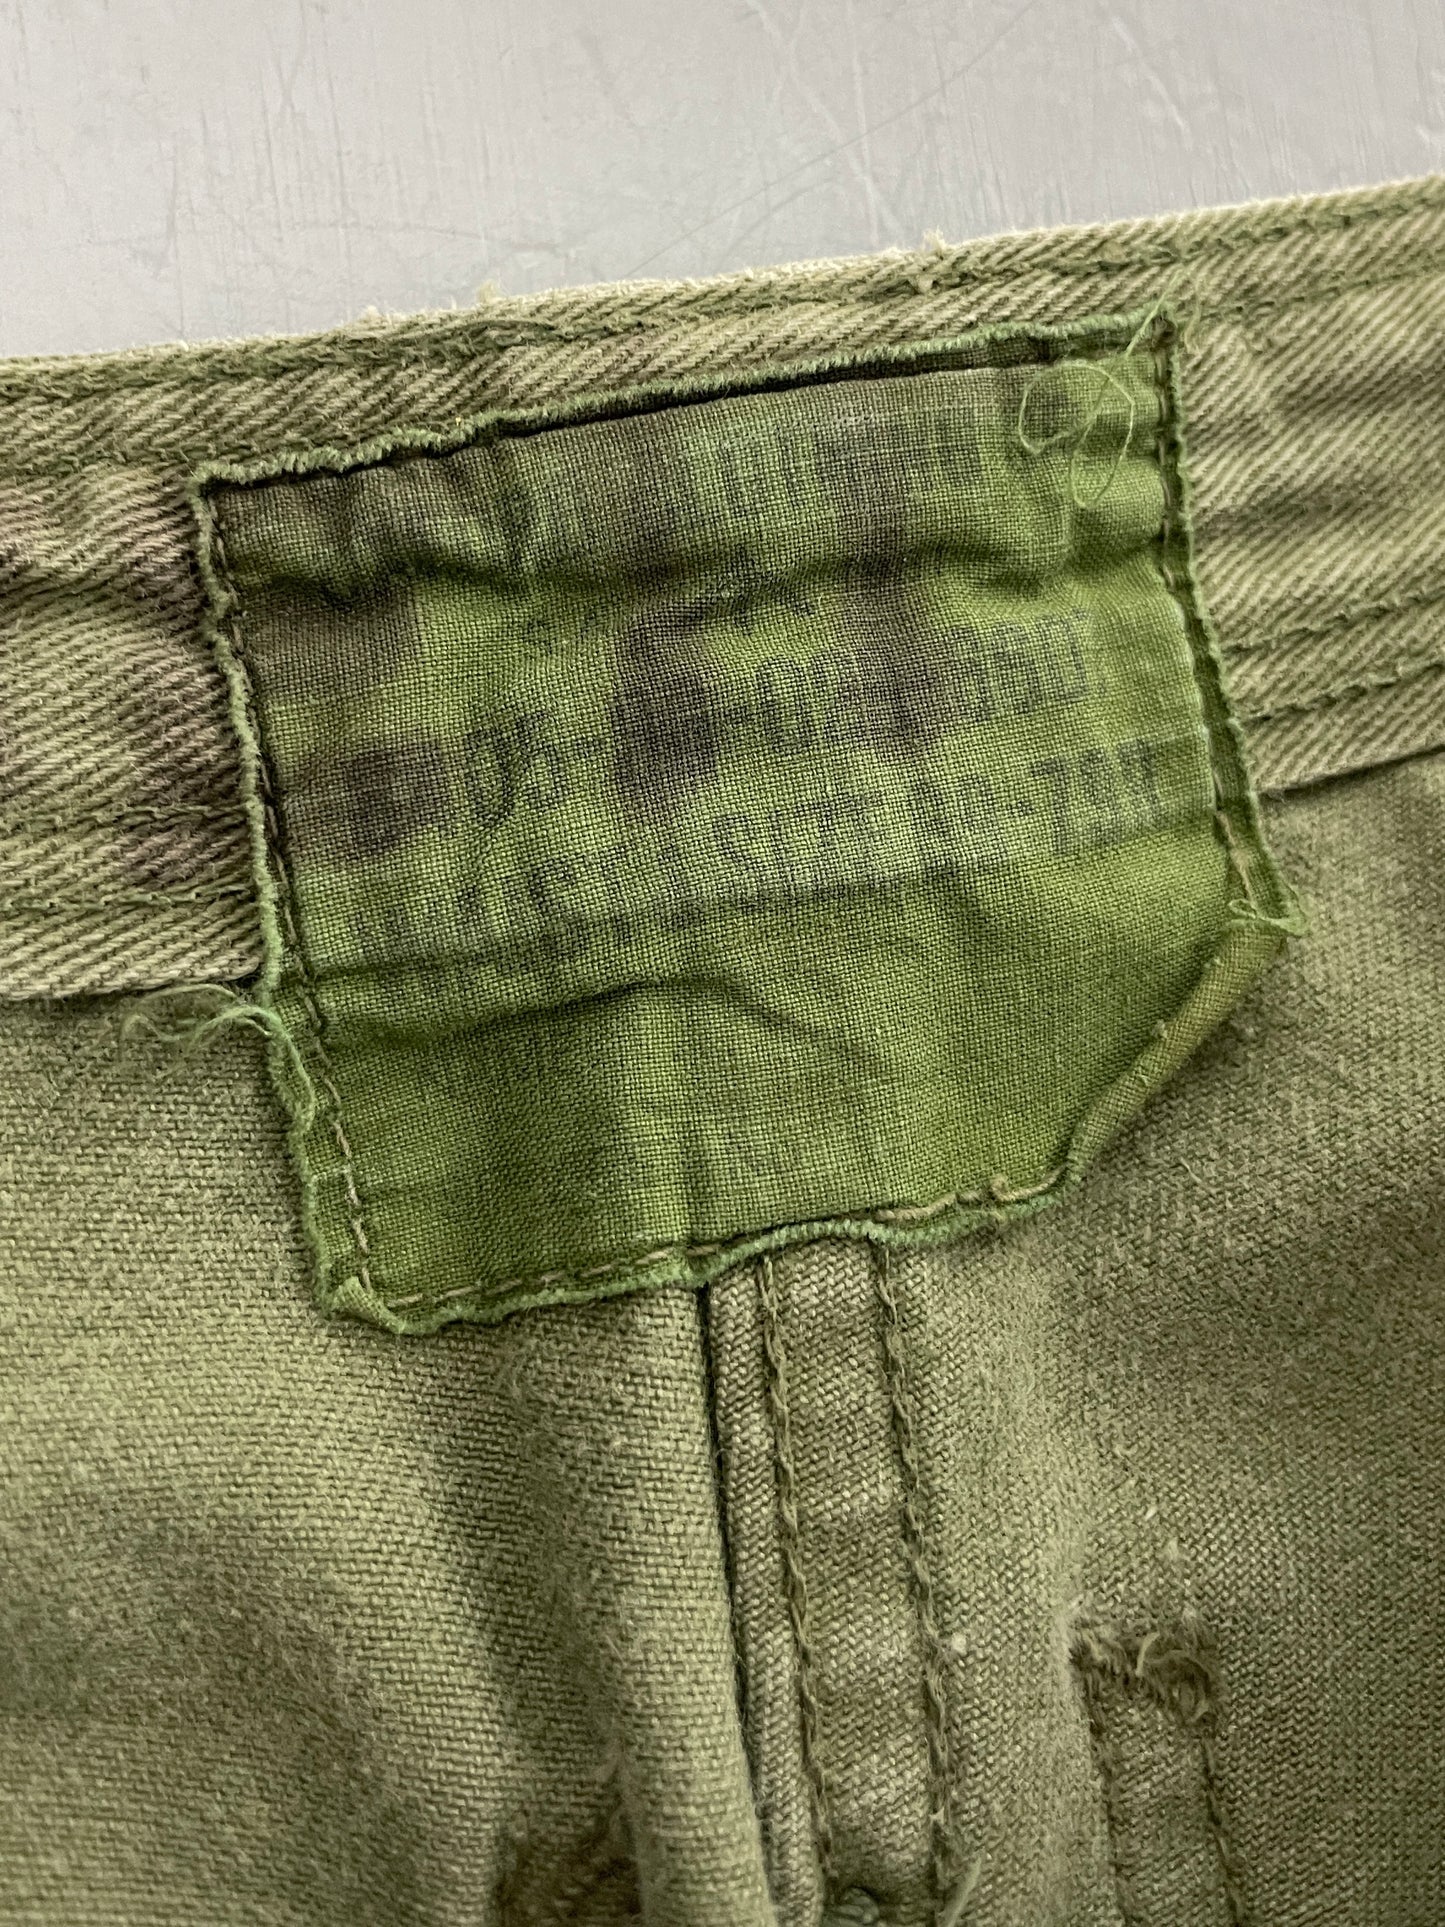 Aus Army Cargo Shorts [30"]